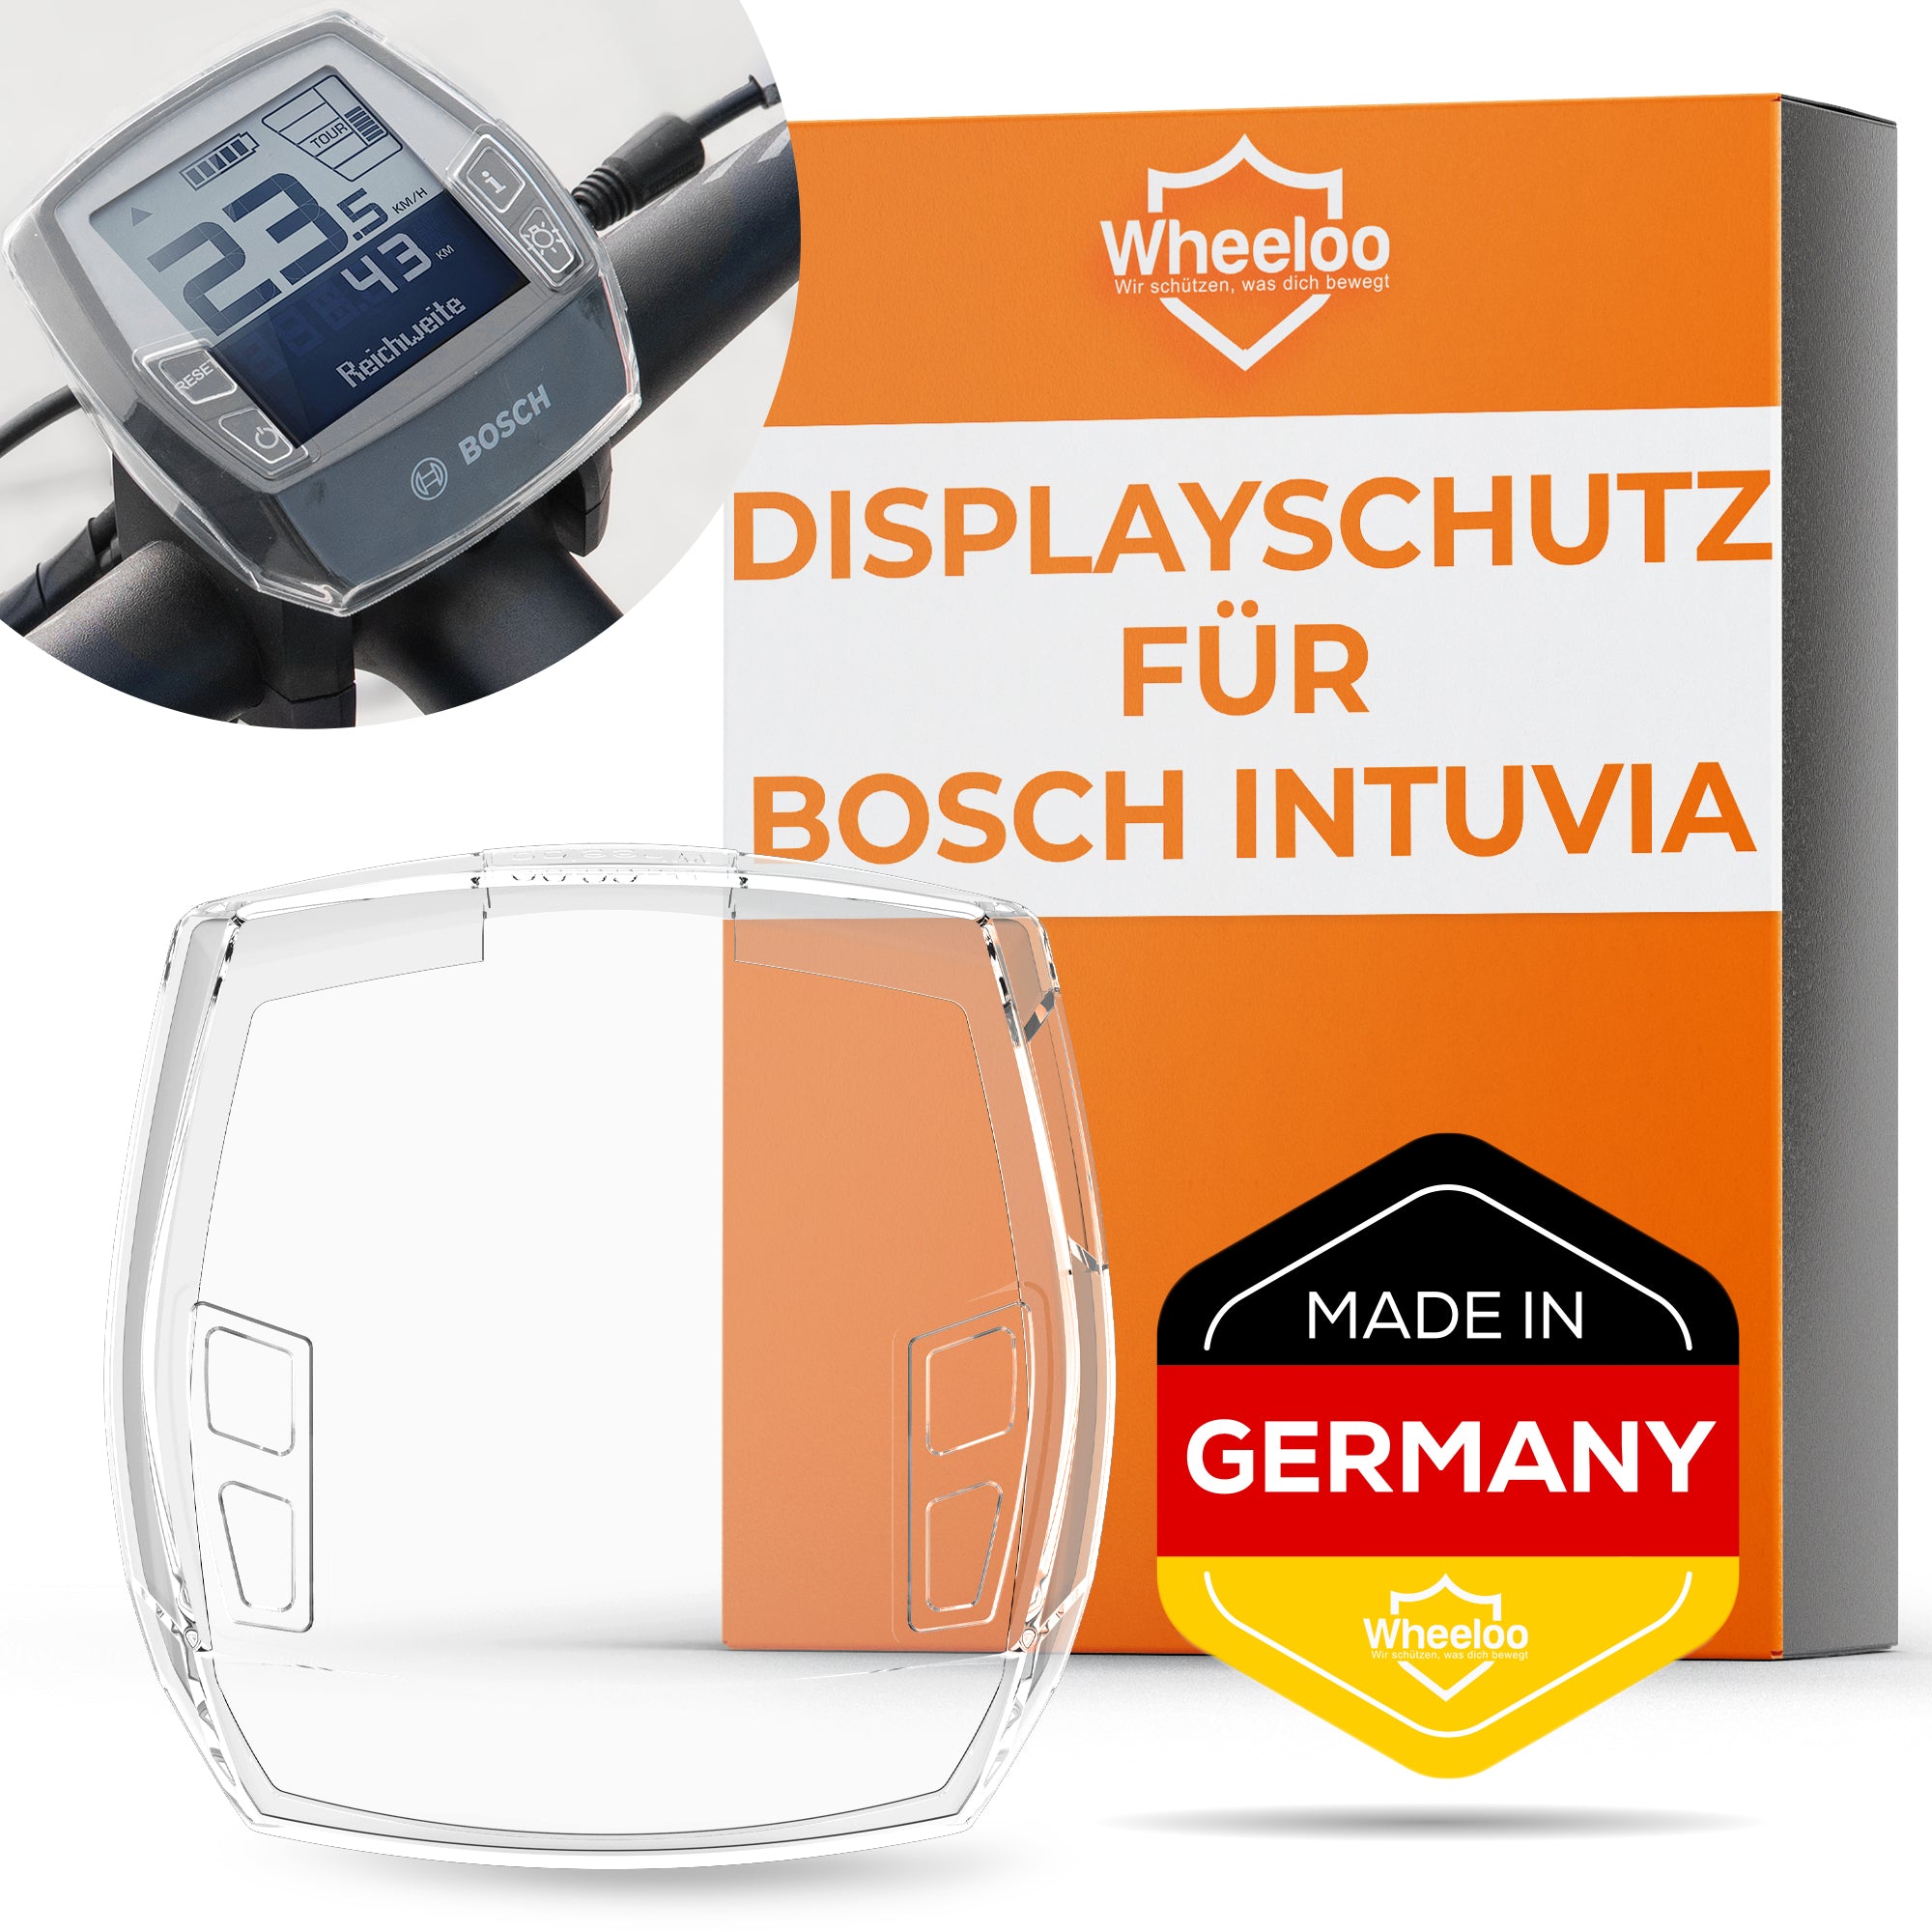 WHEELOO E-Bike Displayschutz 2er Set  geeignet für Bosch Intuvia Disp –  Wheeloo-Shop